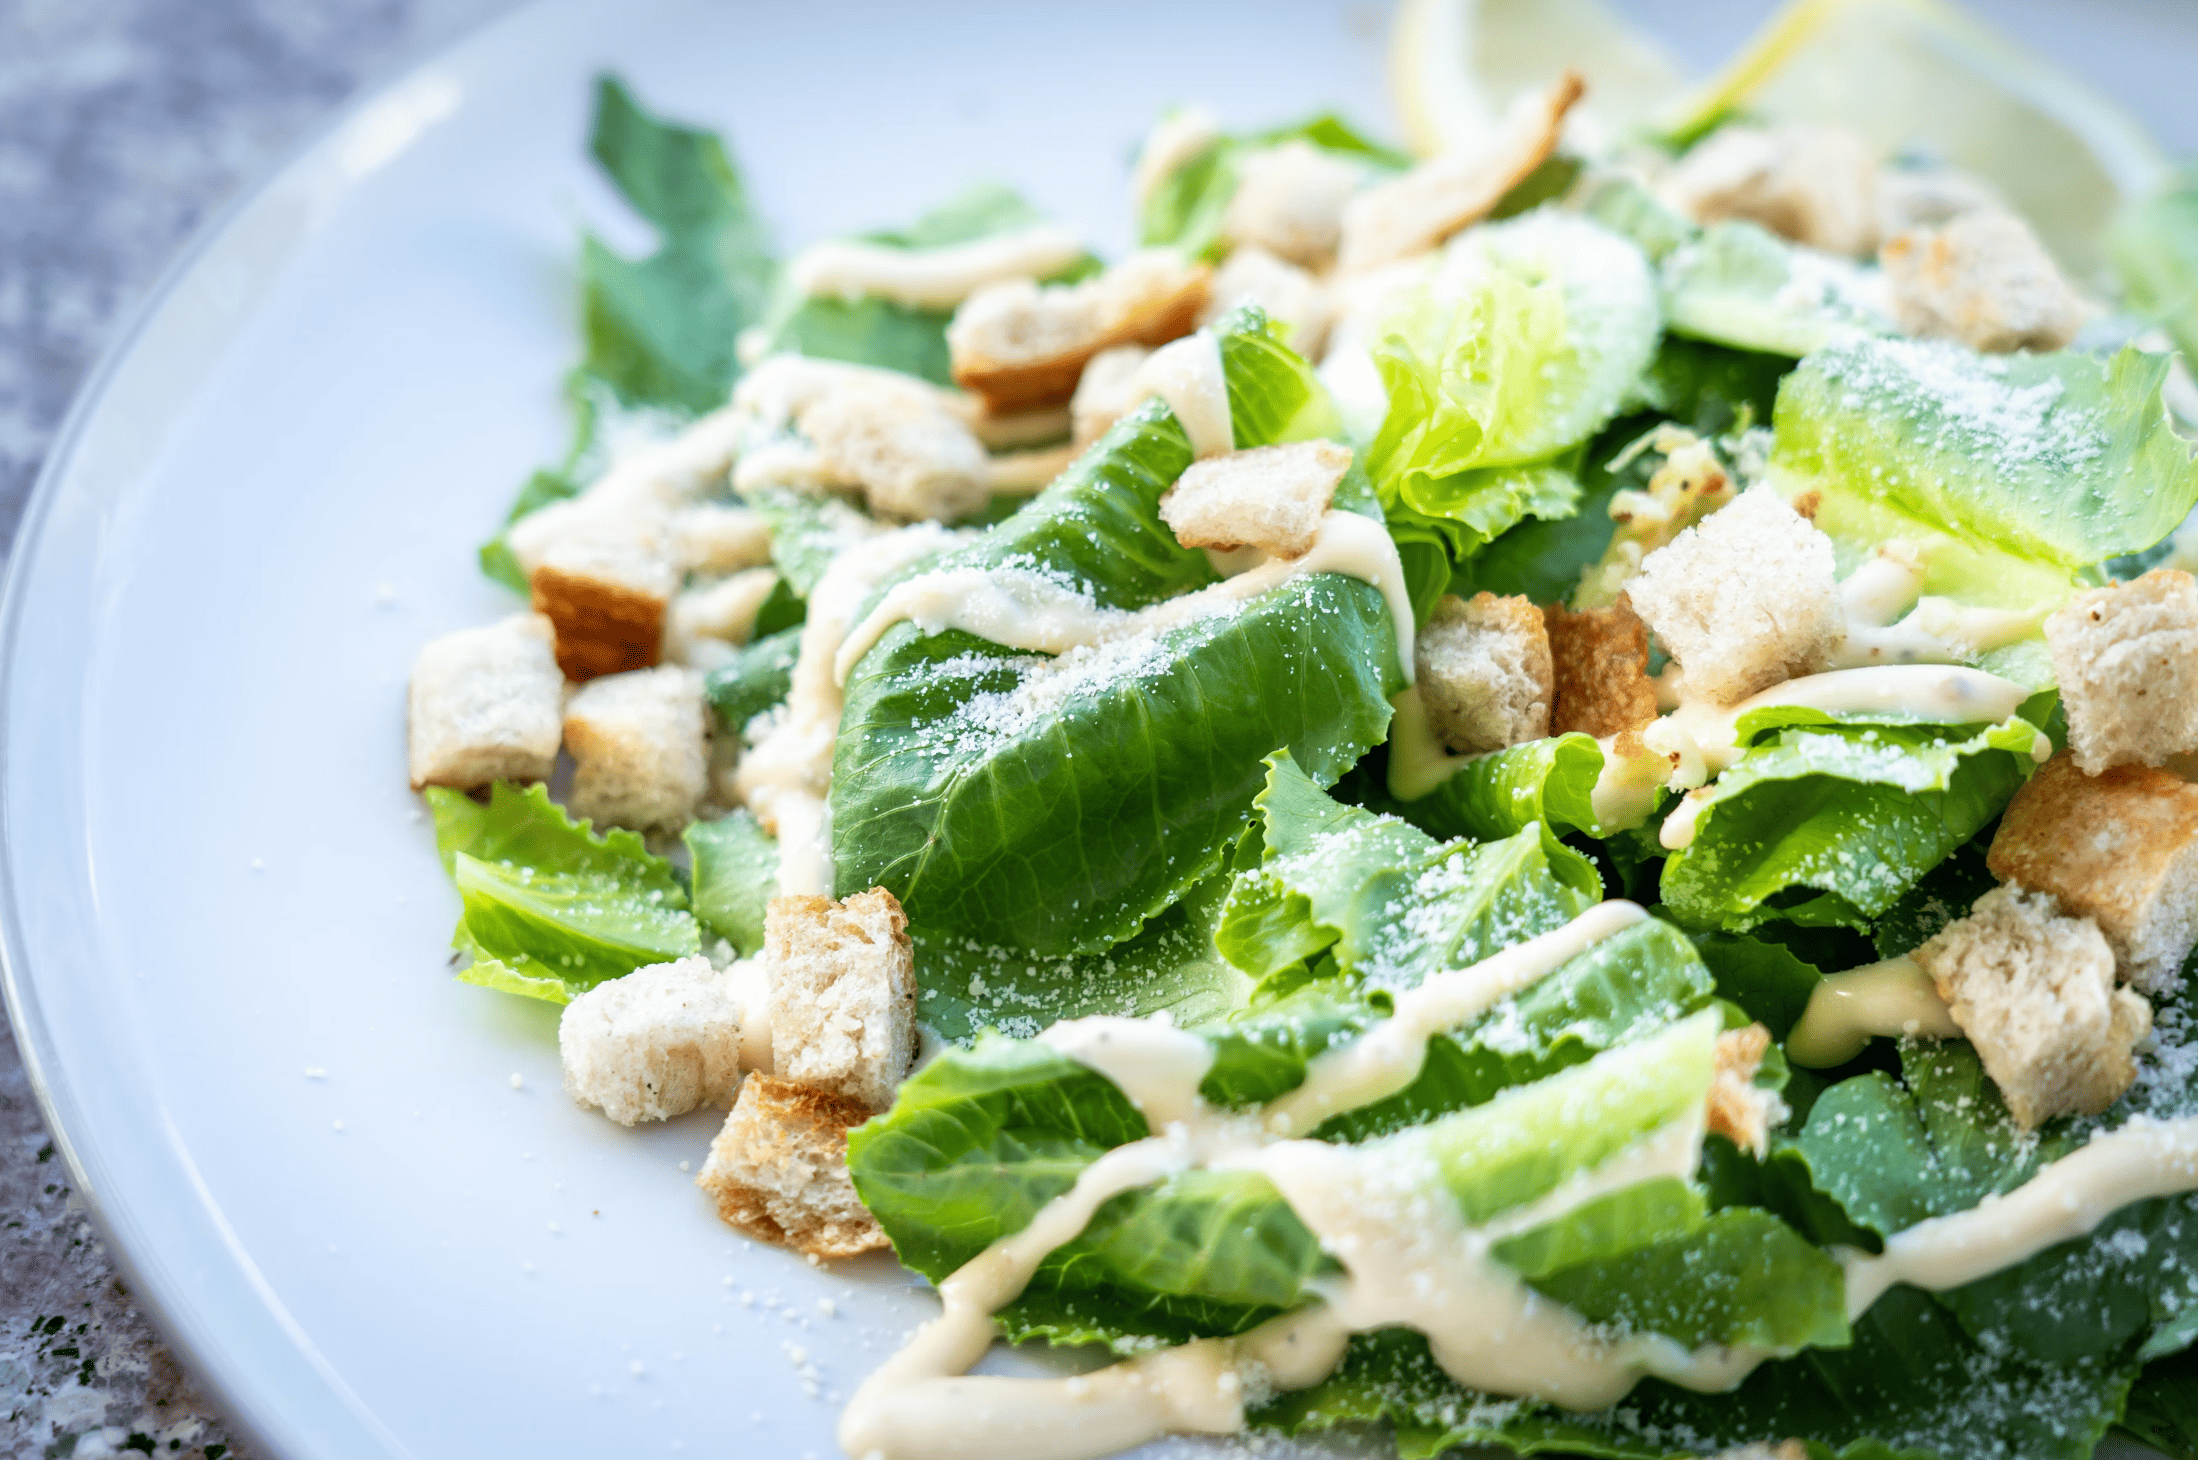 Secret of Caesar salad: John Robert Sutton Reveals on "Foods That Matter" Podcast